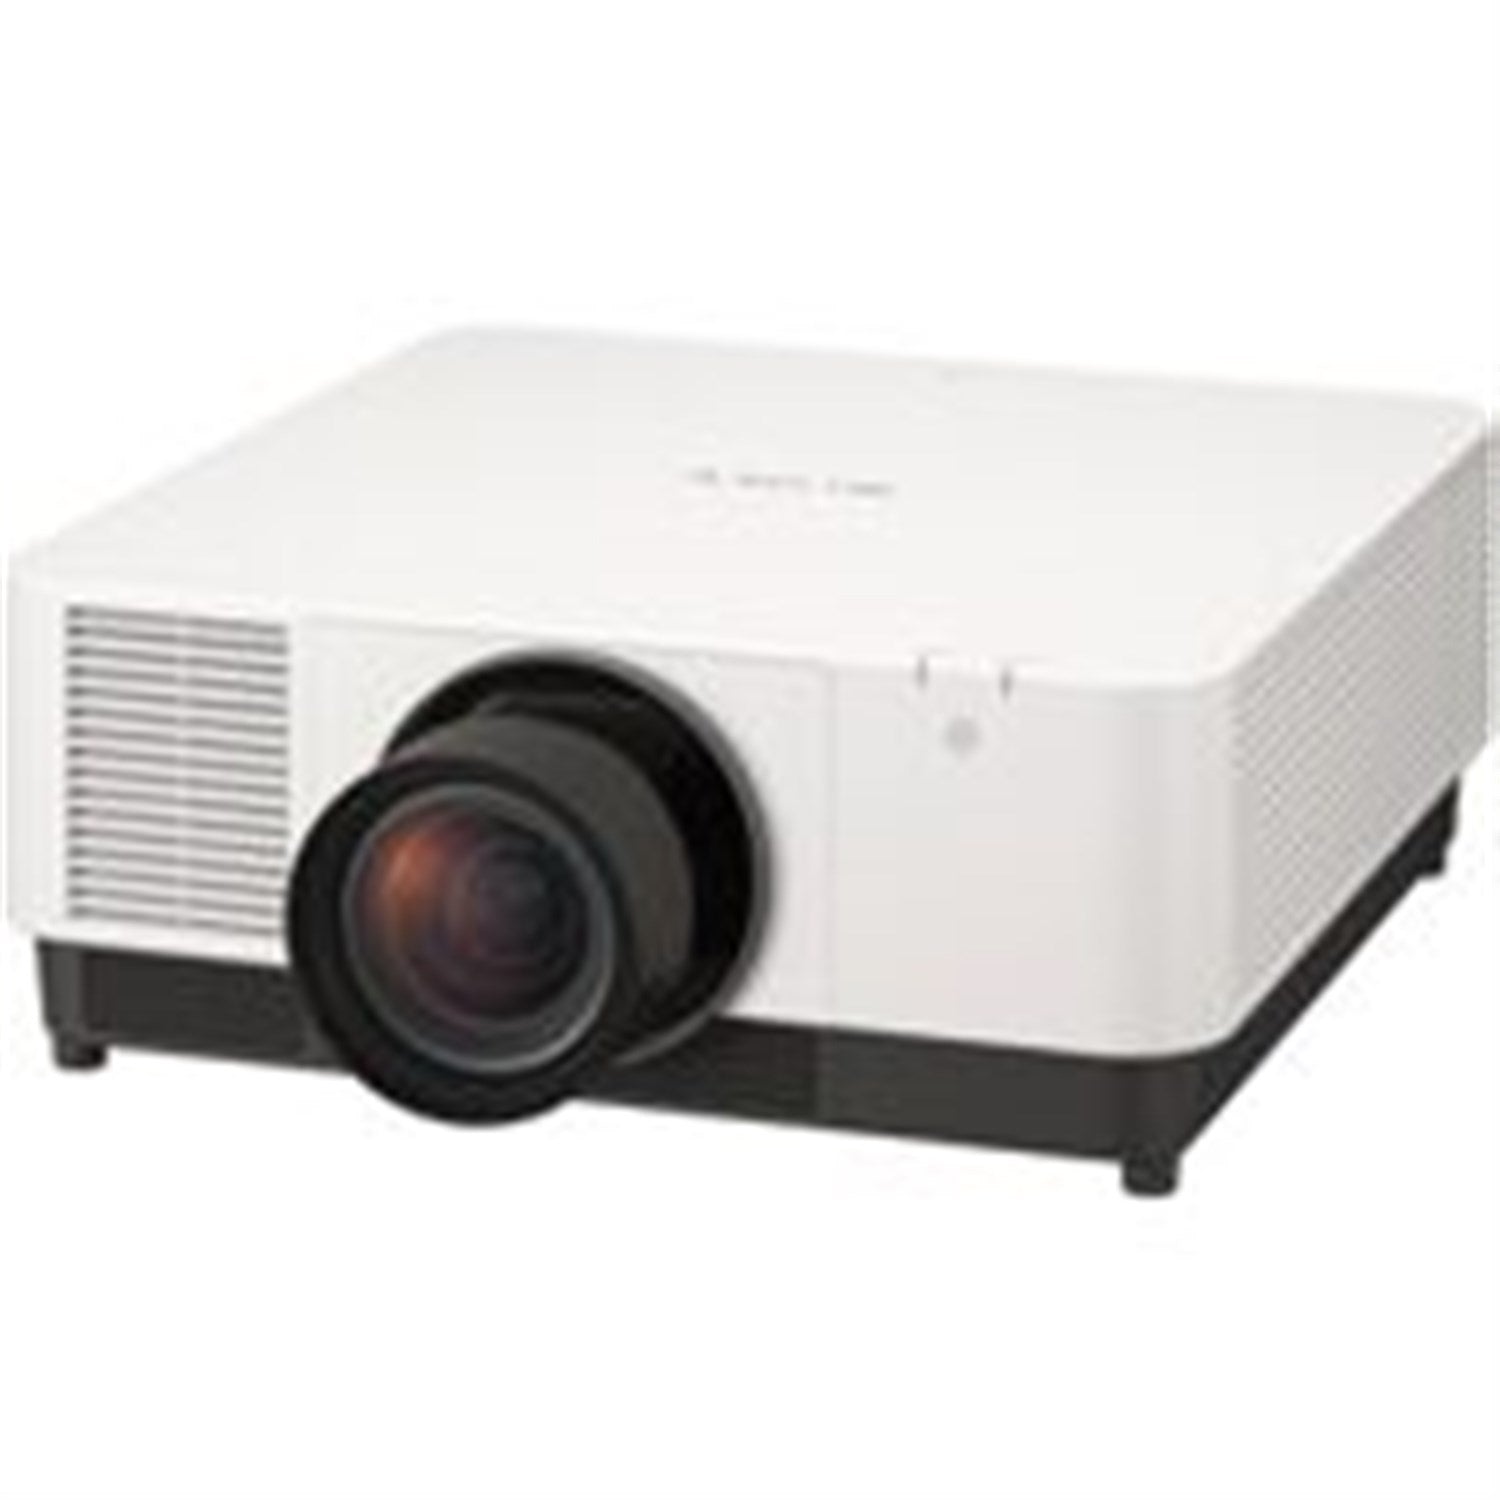 SONY - VPL-FHZ131L WUXGA 13000 lm Laser 3LCD Projector - White